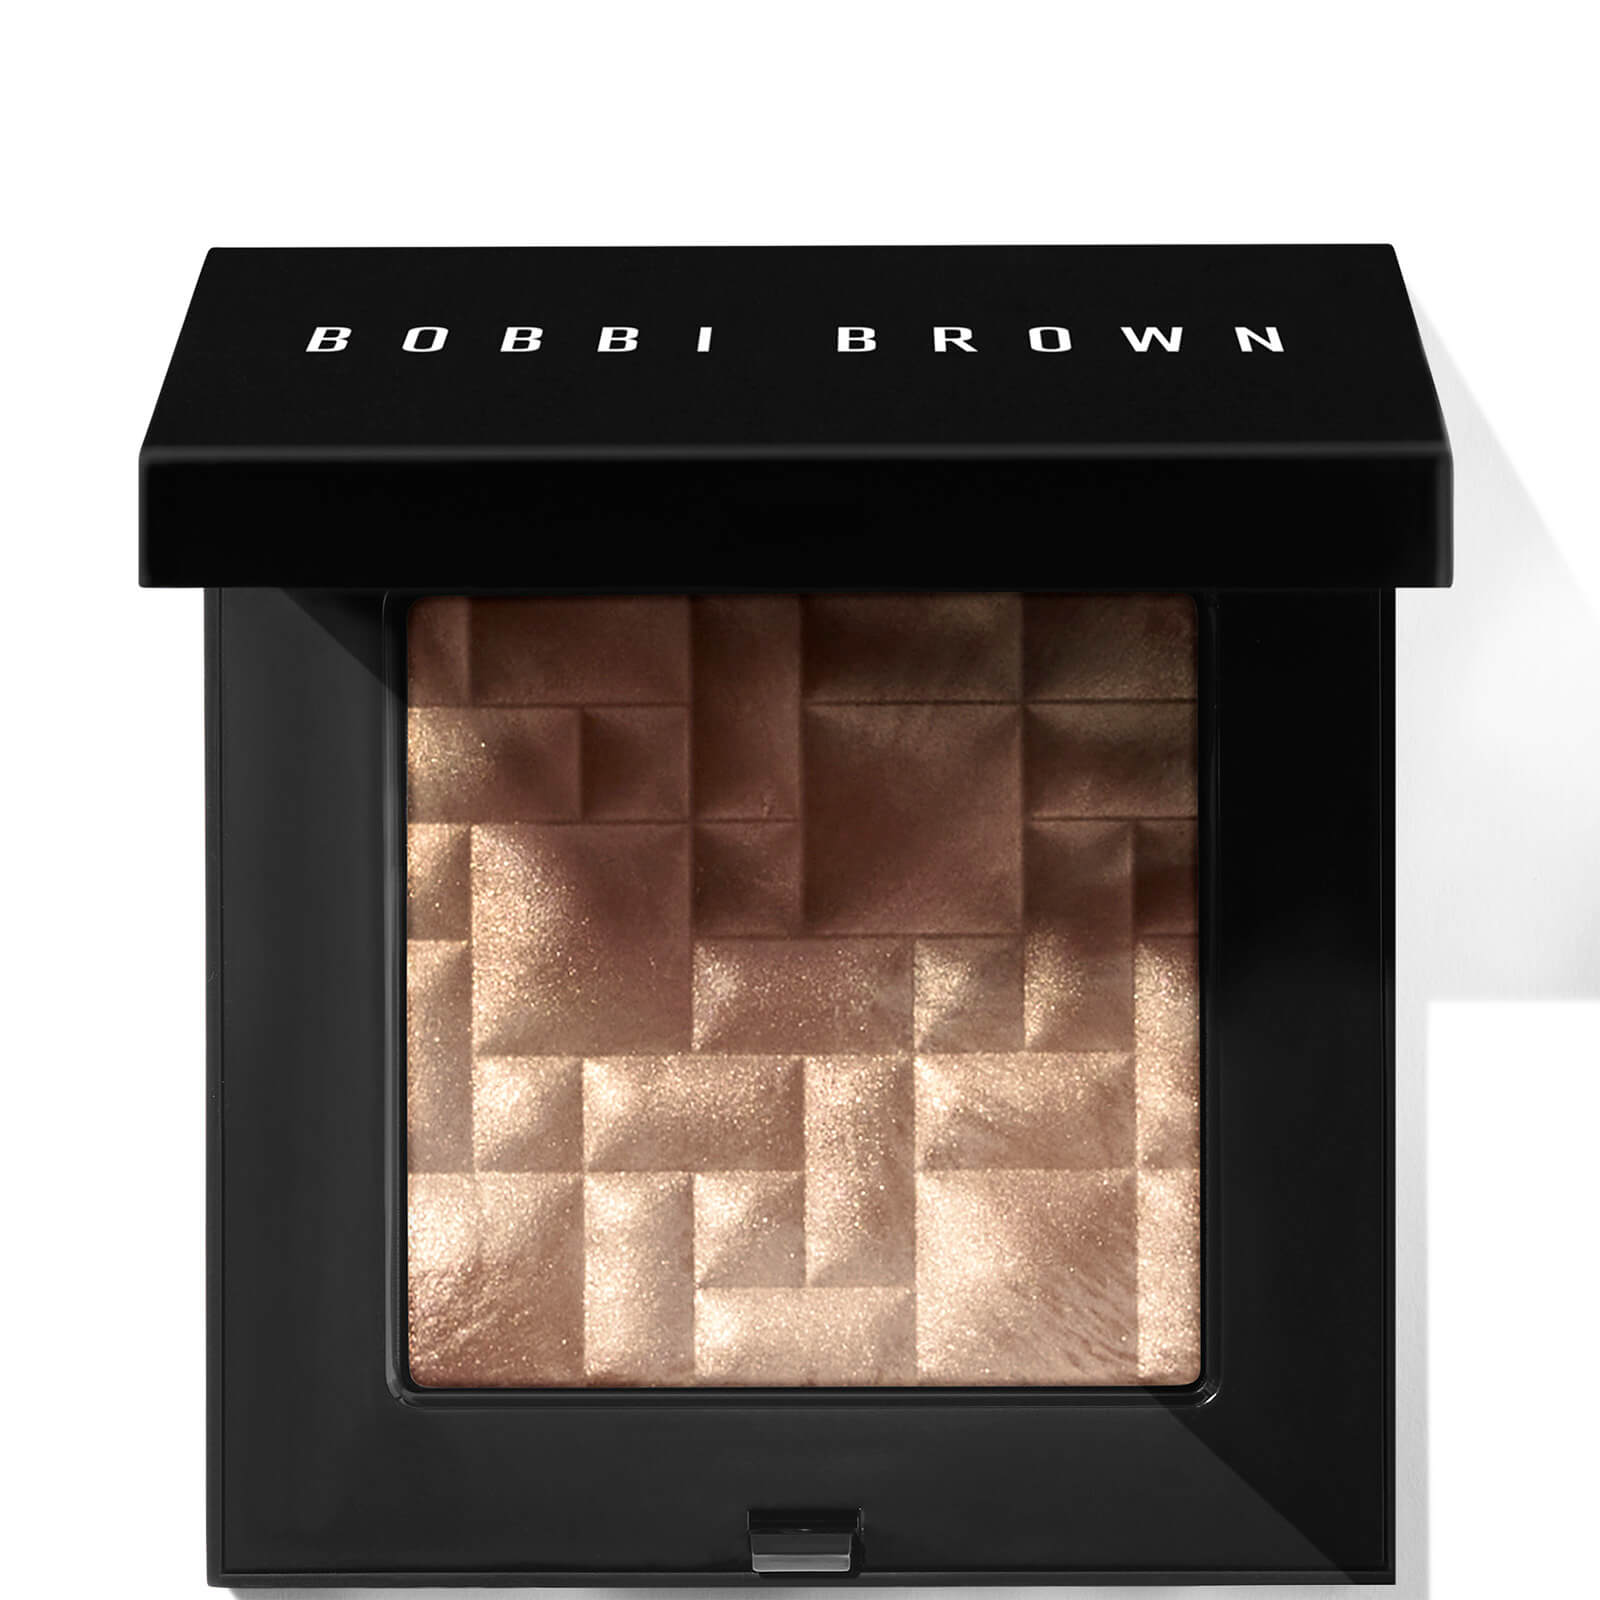 Image of Bobbi Brown Highlighting Powder 10g (Various Shades) - Chestnut Glow